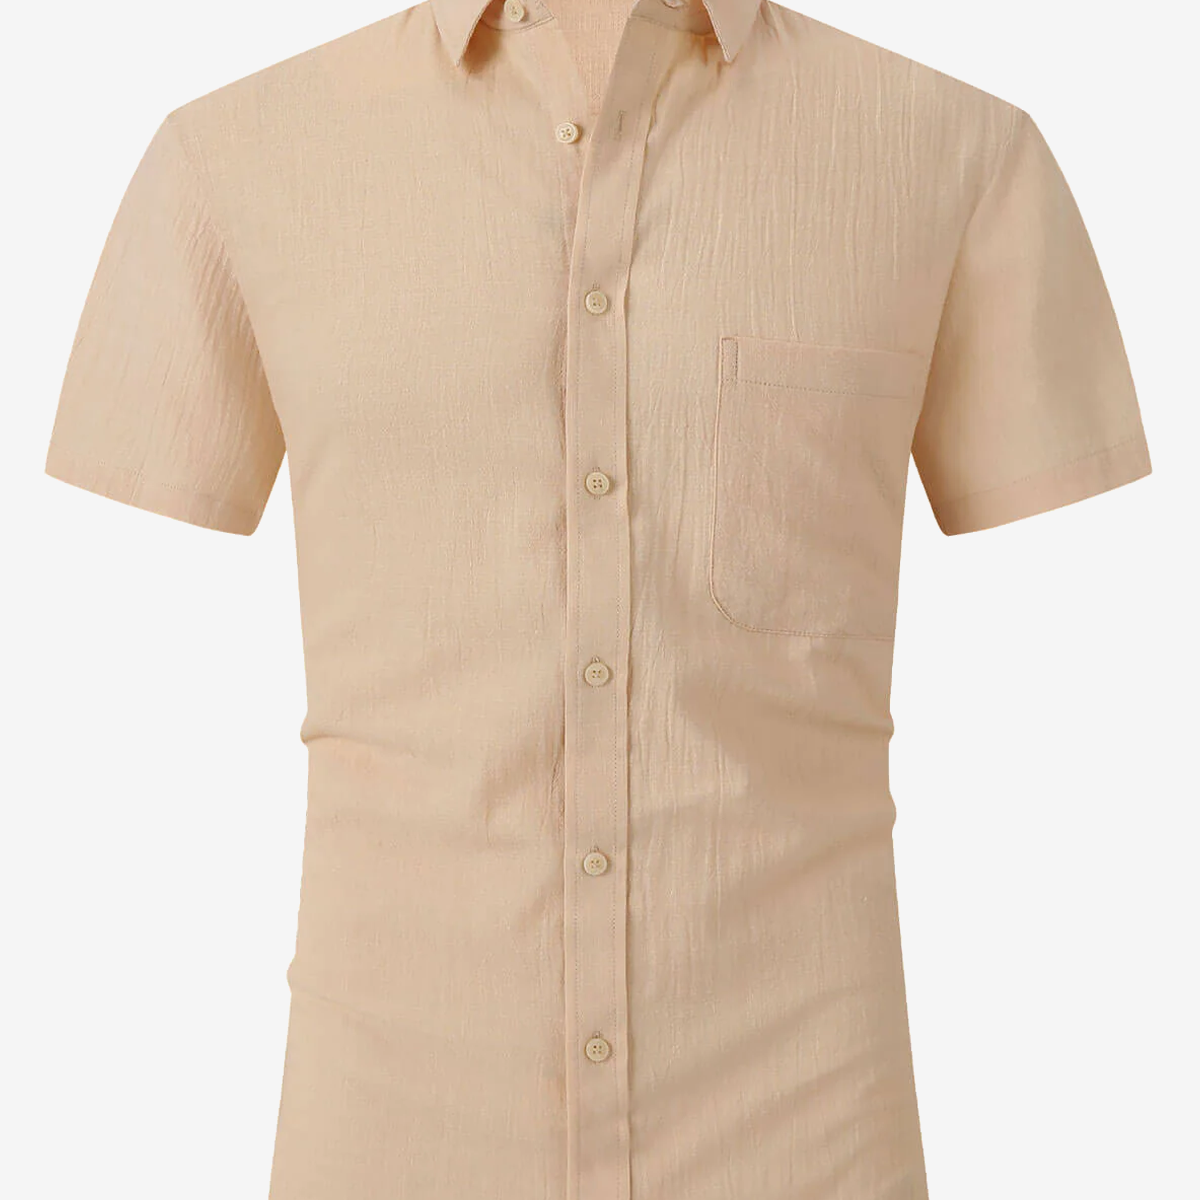 Men's Cotton Casual Pocket Solid Color Summer Short Sleeve Shirt